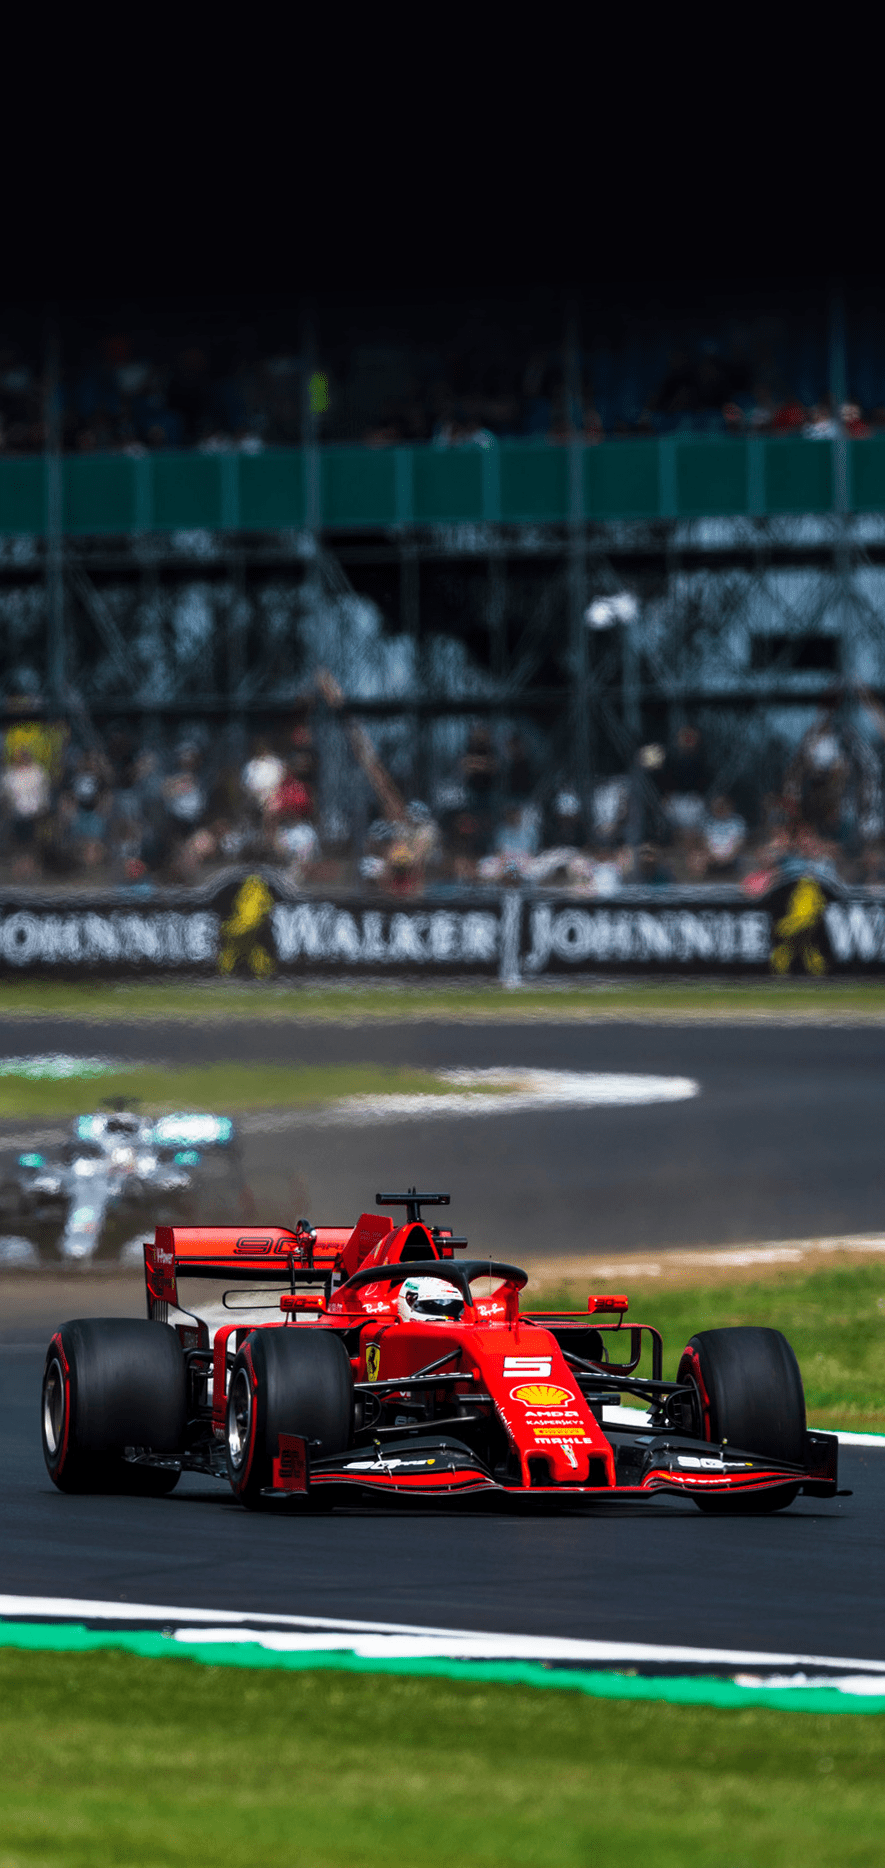 Ferrari F1 Phone Wallpapers Top Free Ferrari F1 Phone Backgrounds Wallpaperaccess